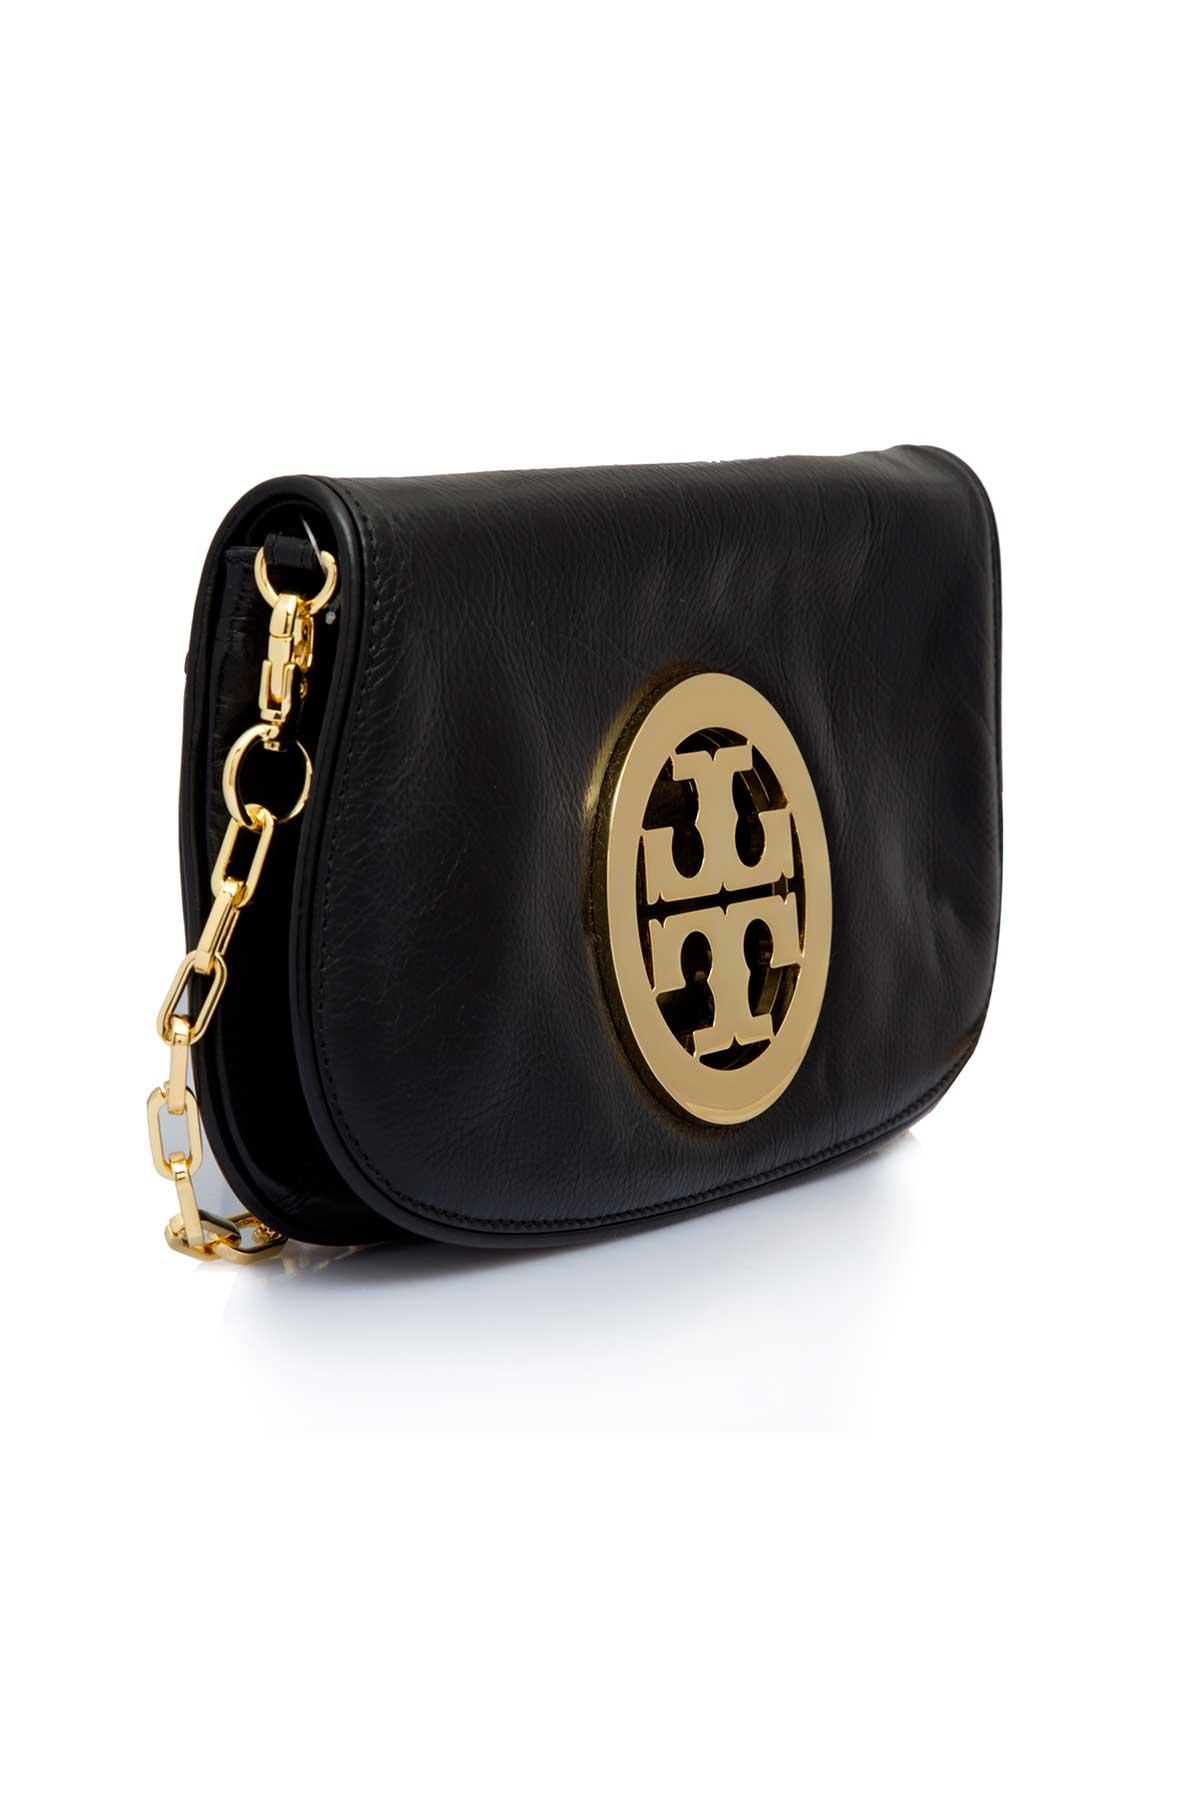 Tory Burch Gold Snakeskin Reva Clutch Purse Magnetic Closure Beige Bag  Women's | eBay